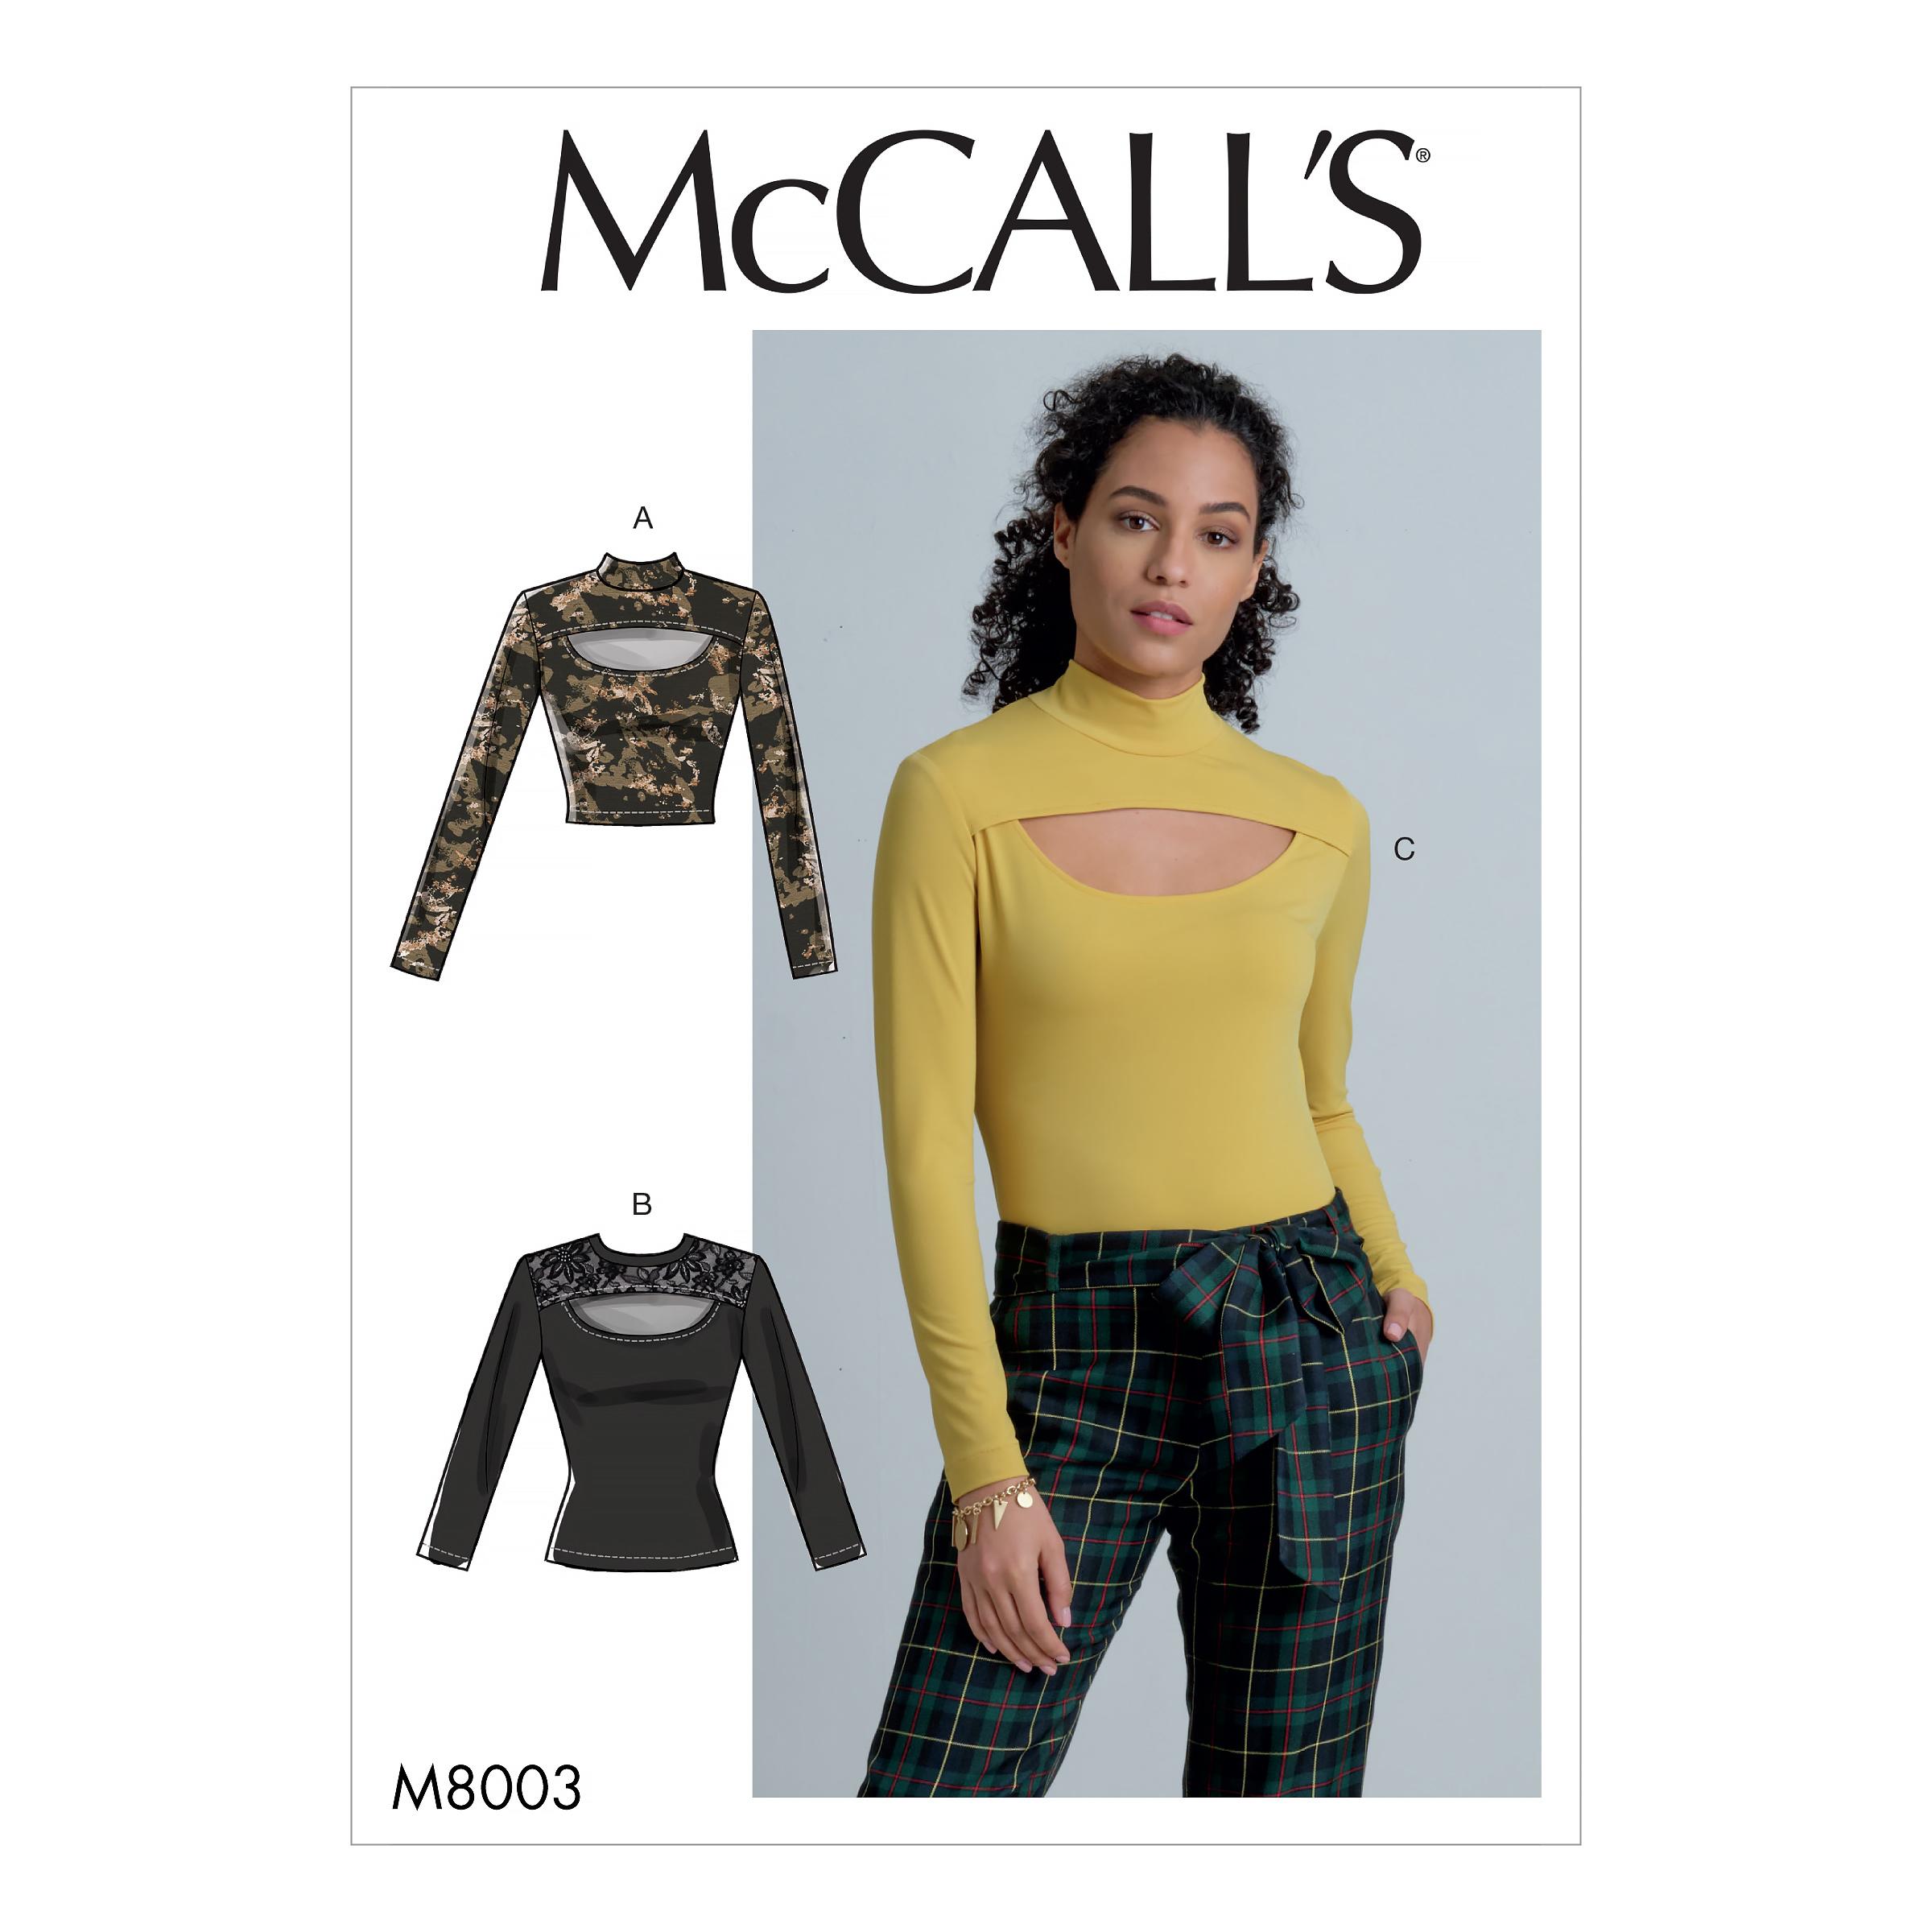 McCalls M8003 Misses Tops